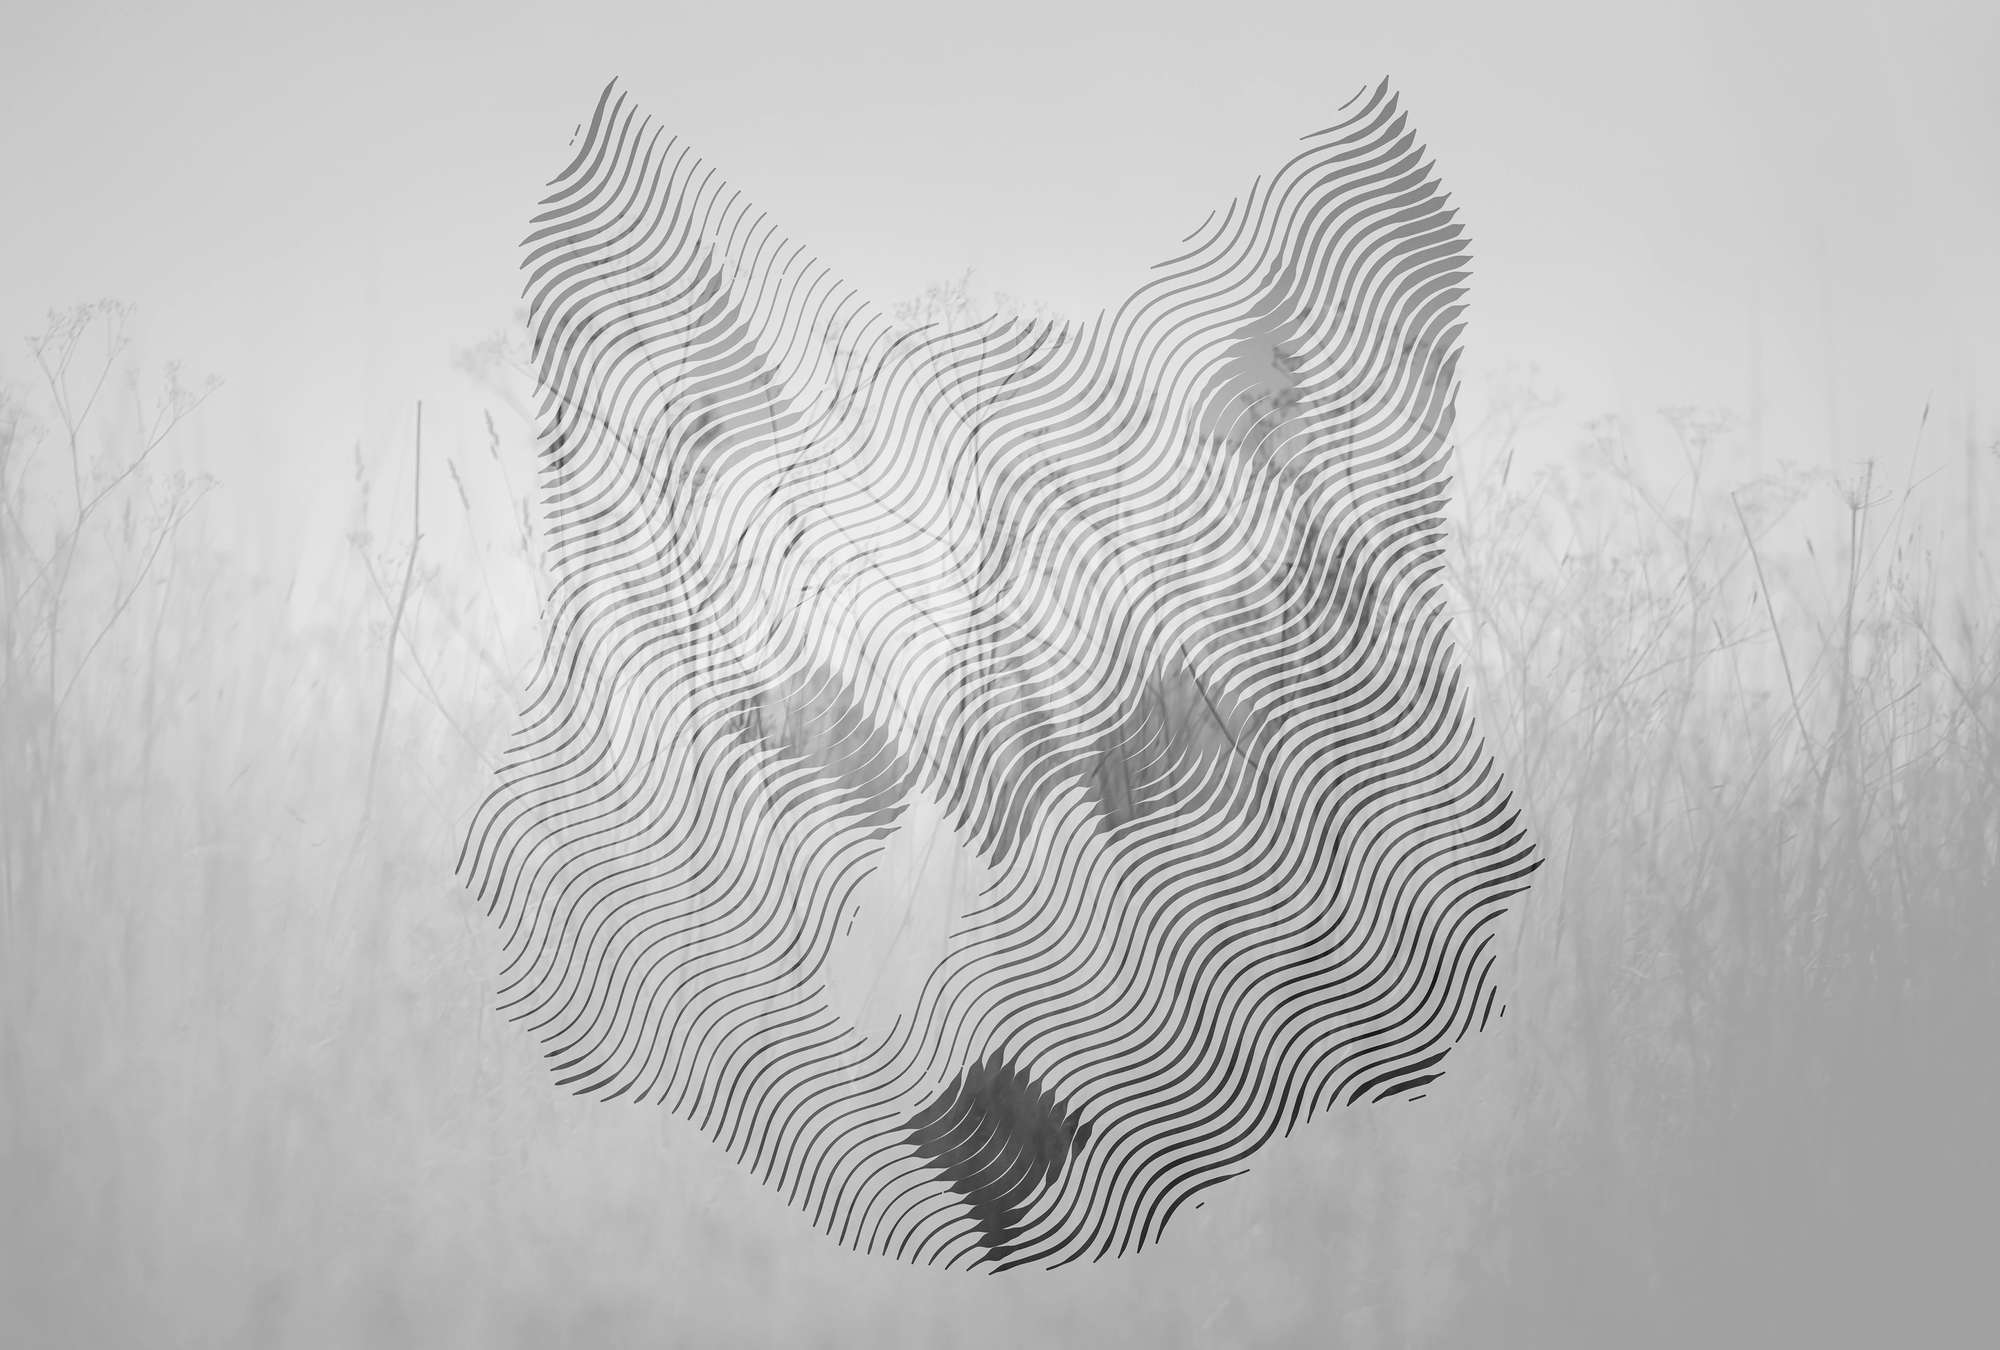             Photo wallpaper meadow & fox, natural design mix - grey, white, black
        